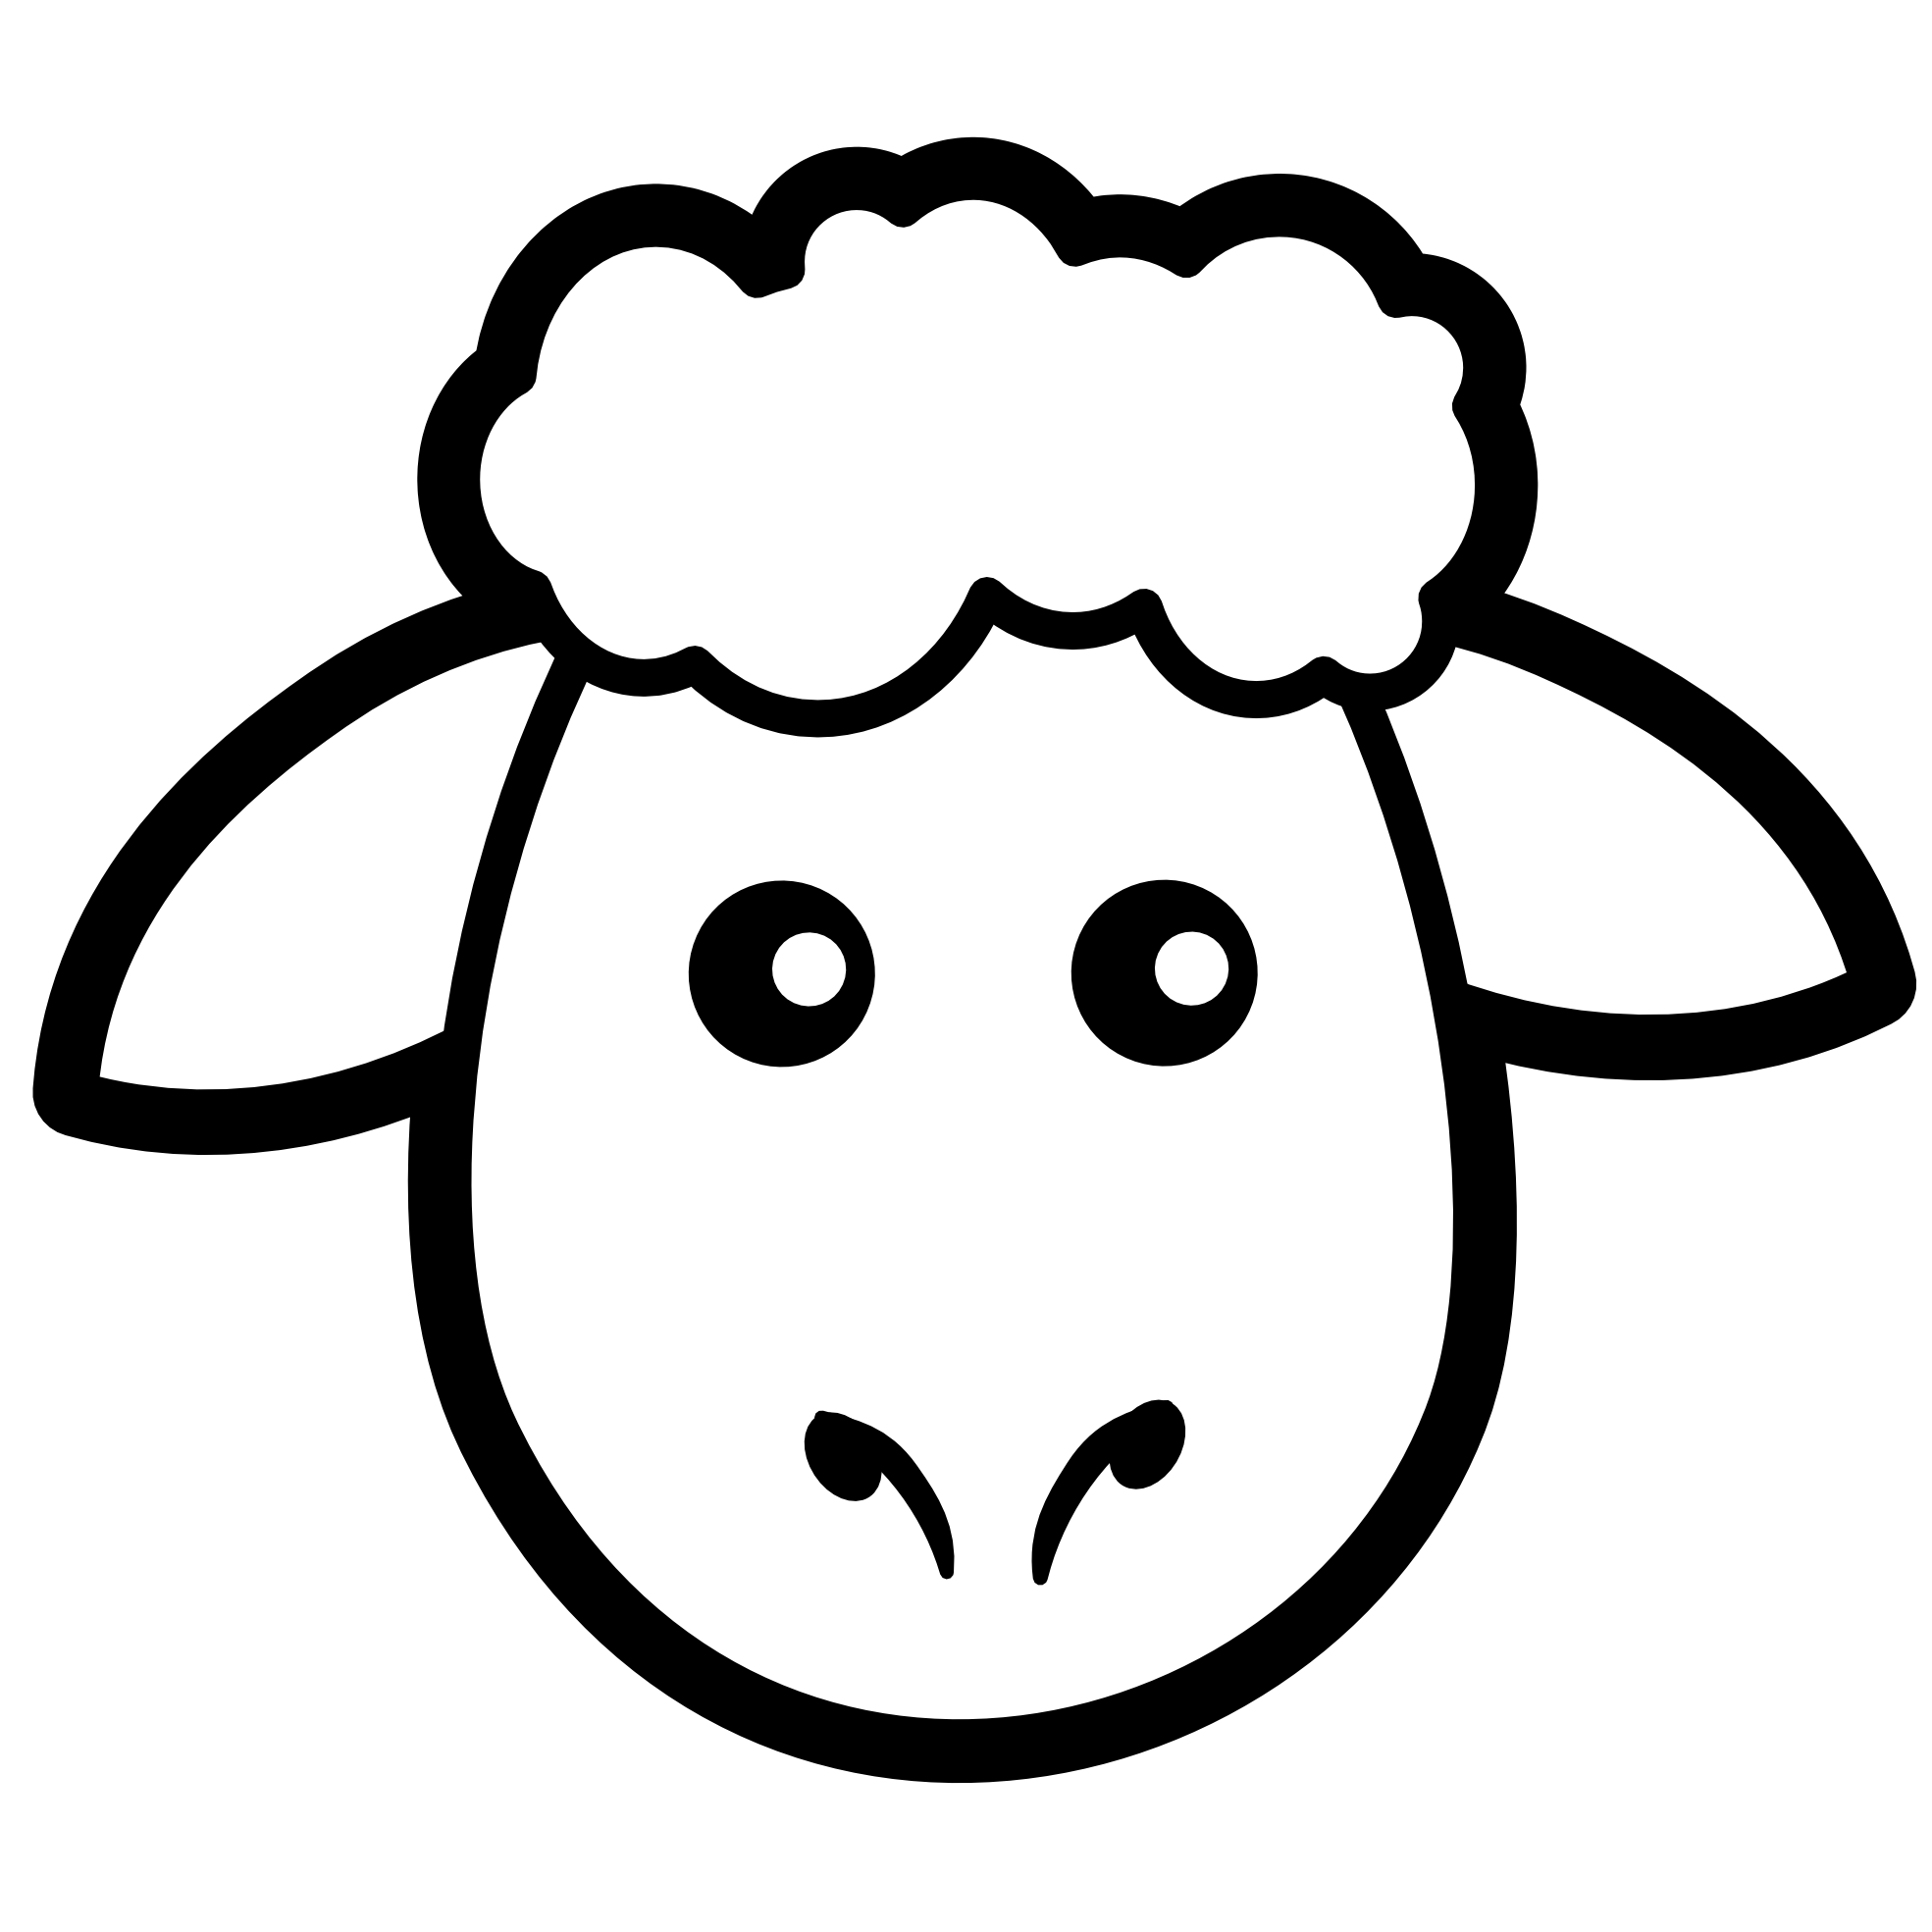 Lamb head clipart outline